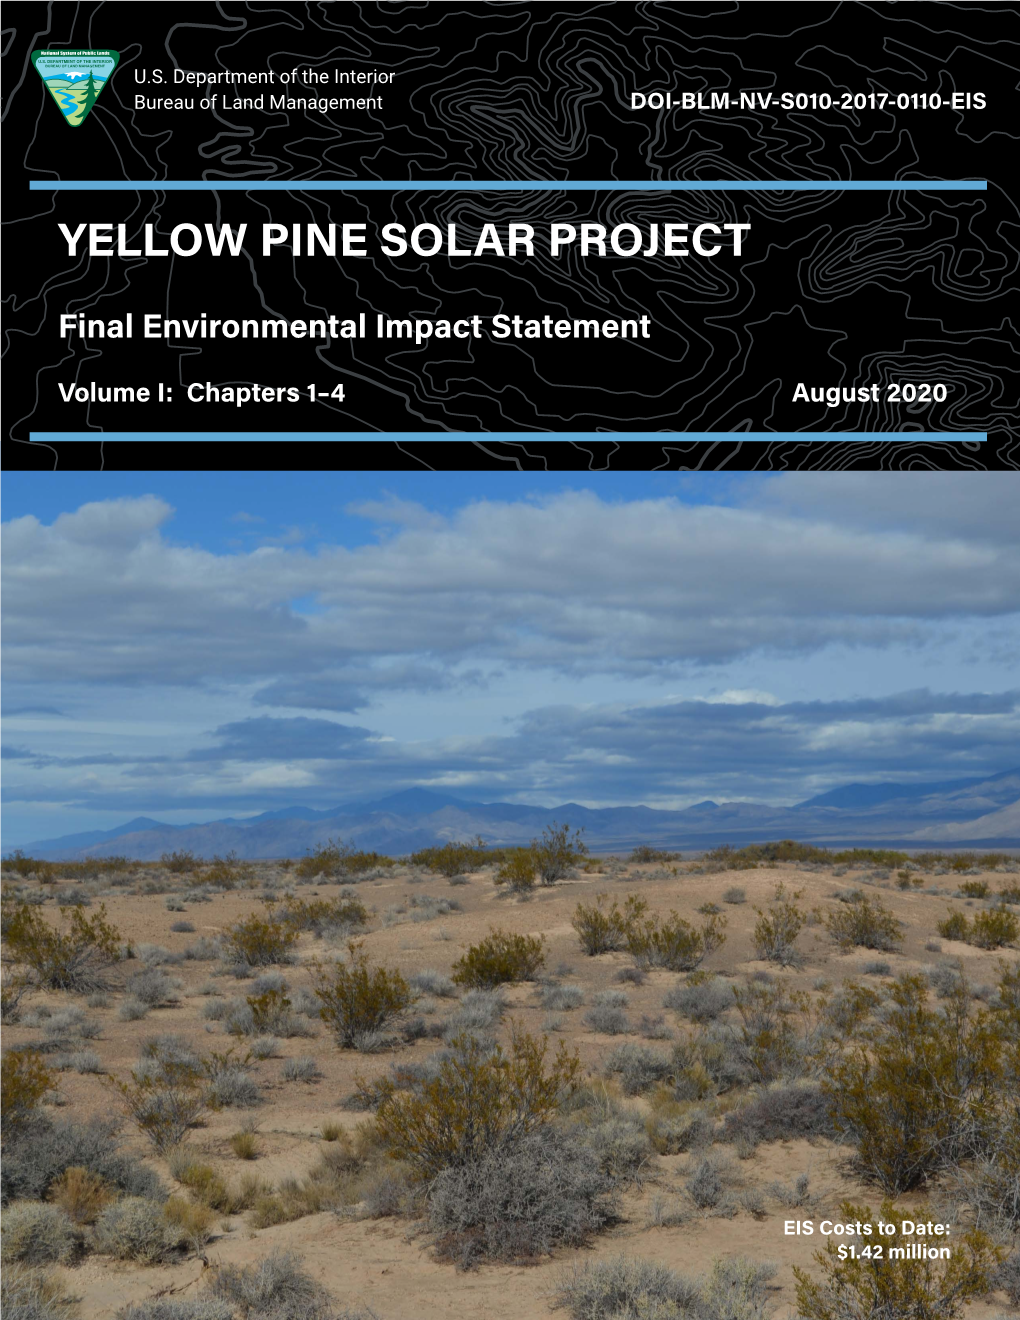 Yellow Pine Solar Project Final Environmental